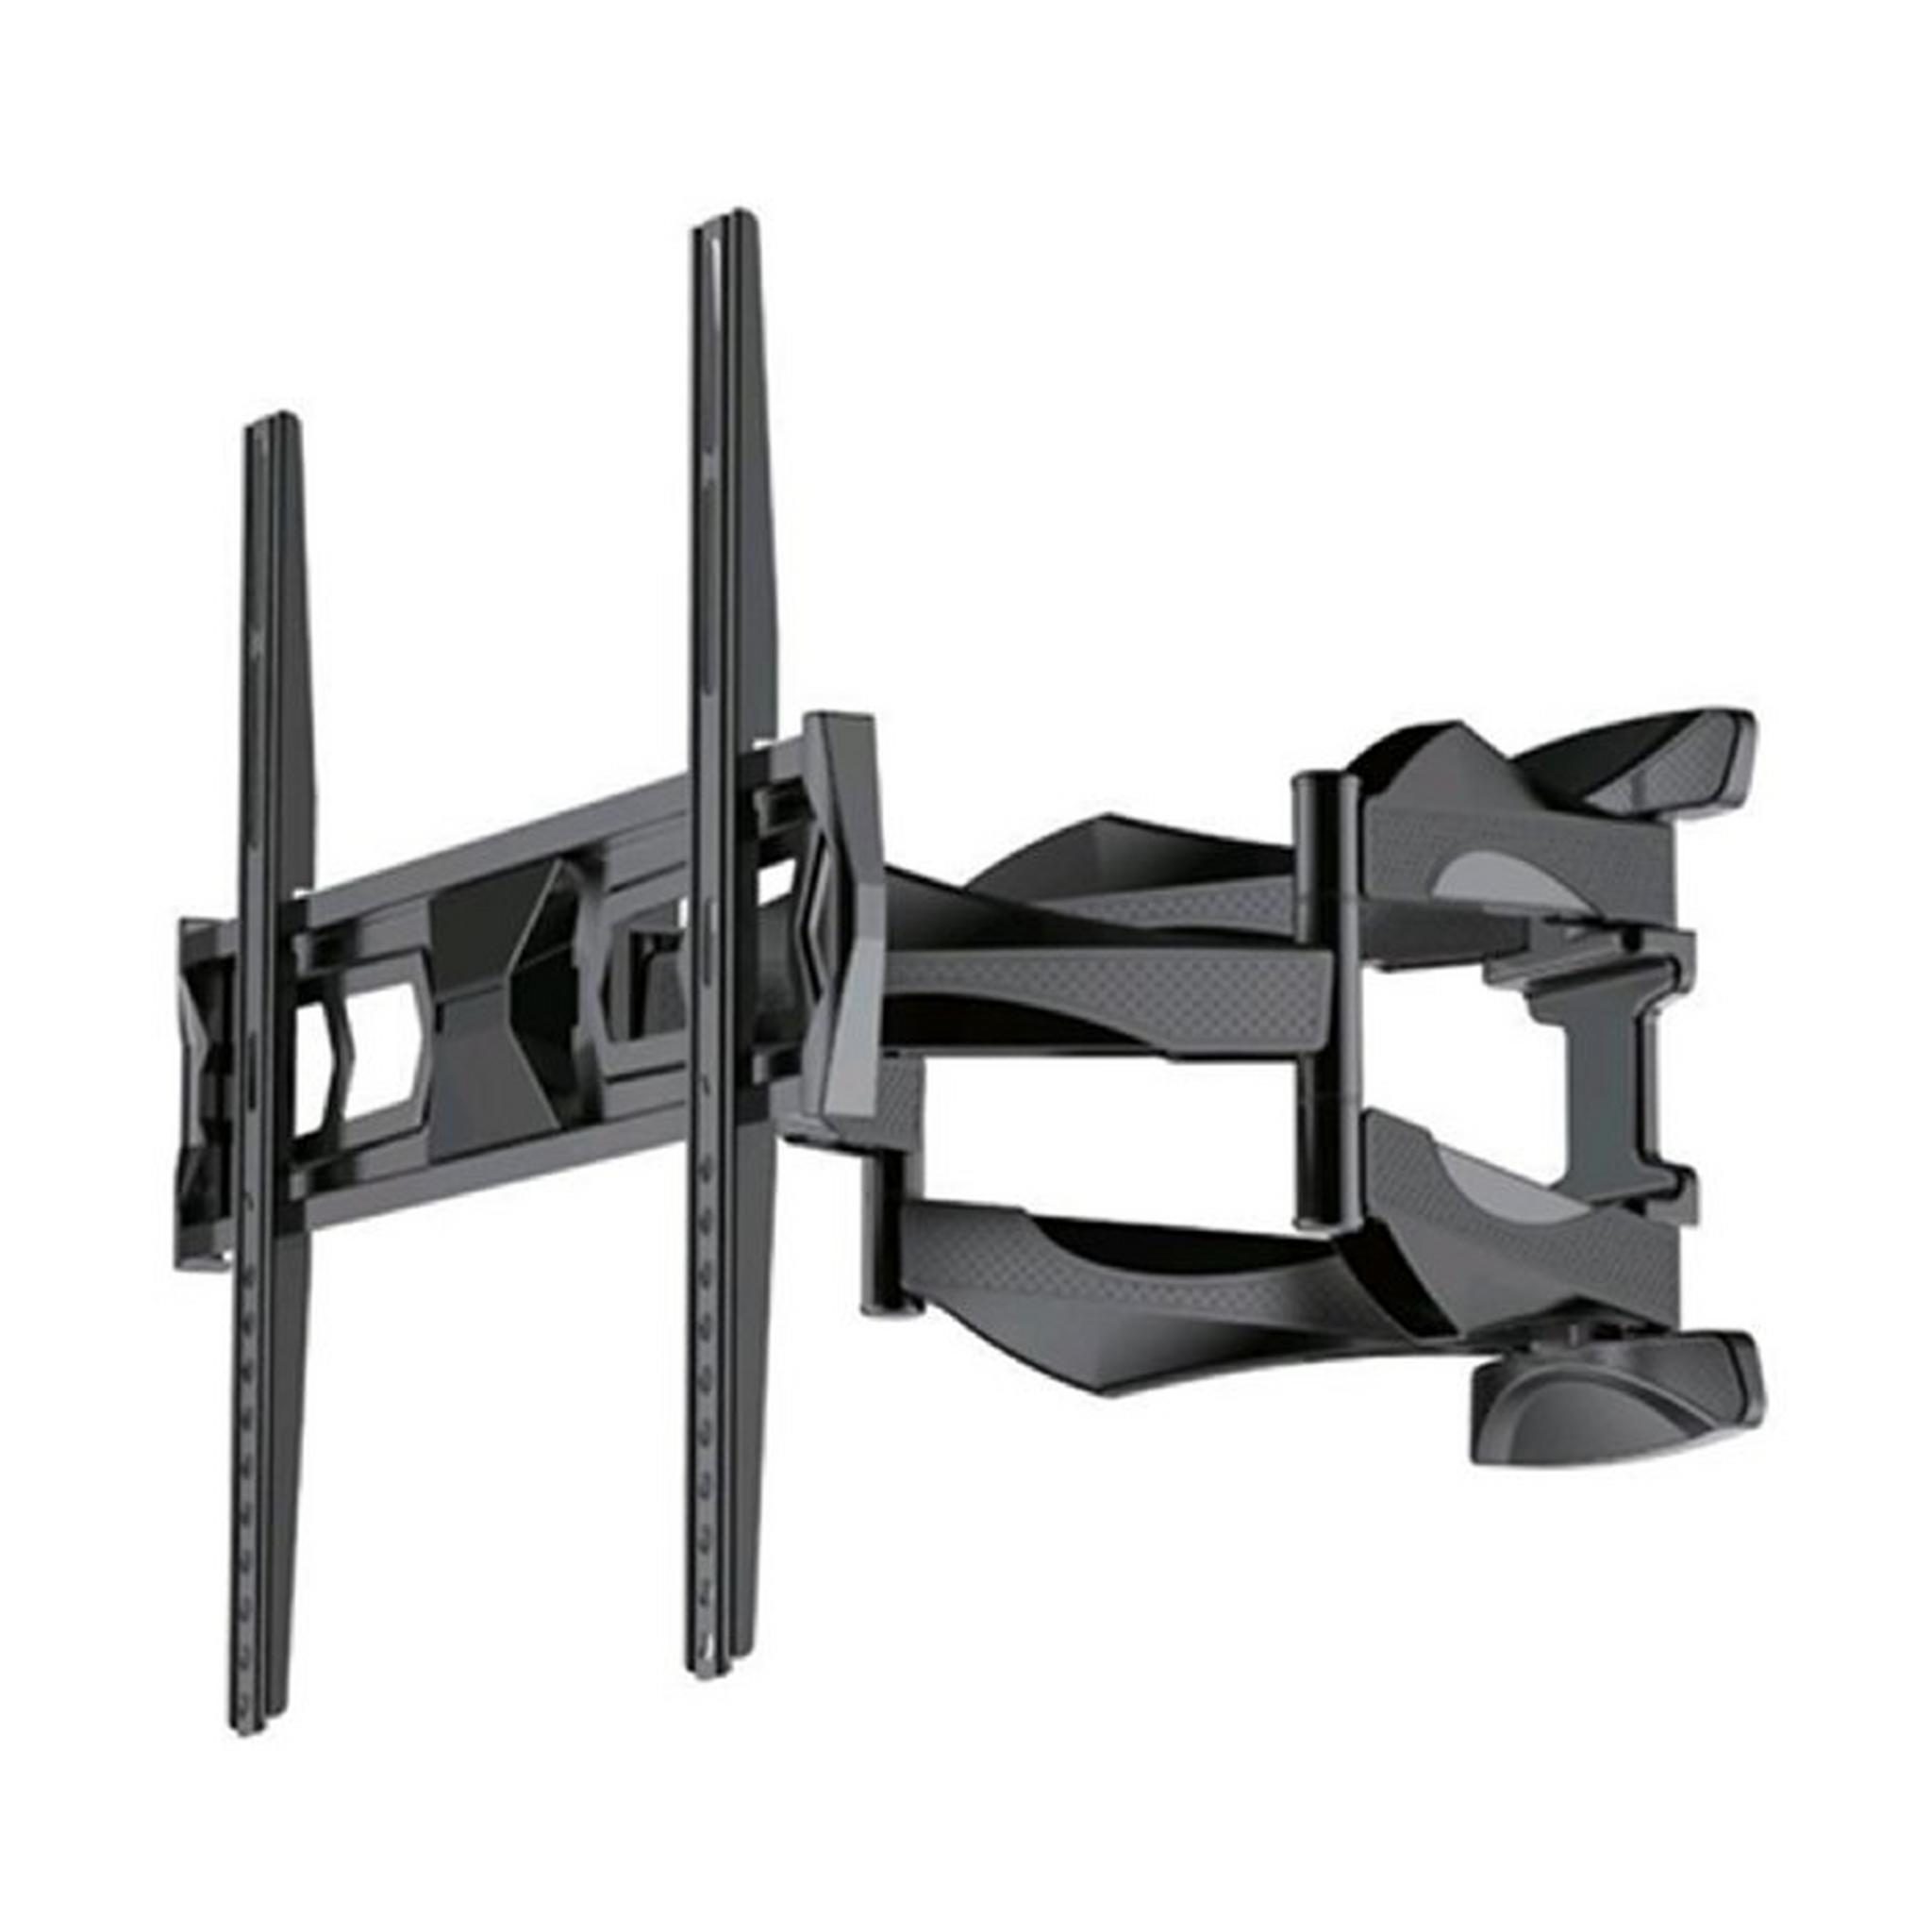 Loctek Full Motion Wall Bracket, Up to 32-60 inch TVs, 30Kg Loading Capacity, PSW862M – Black